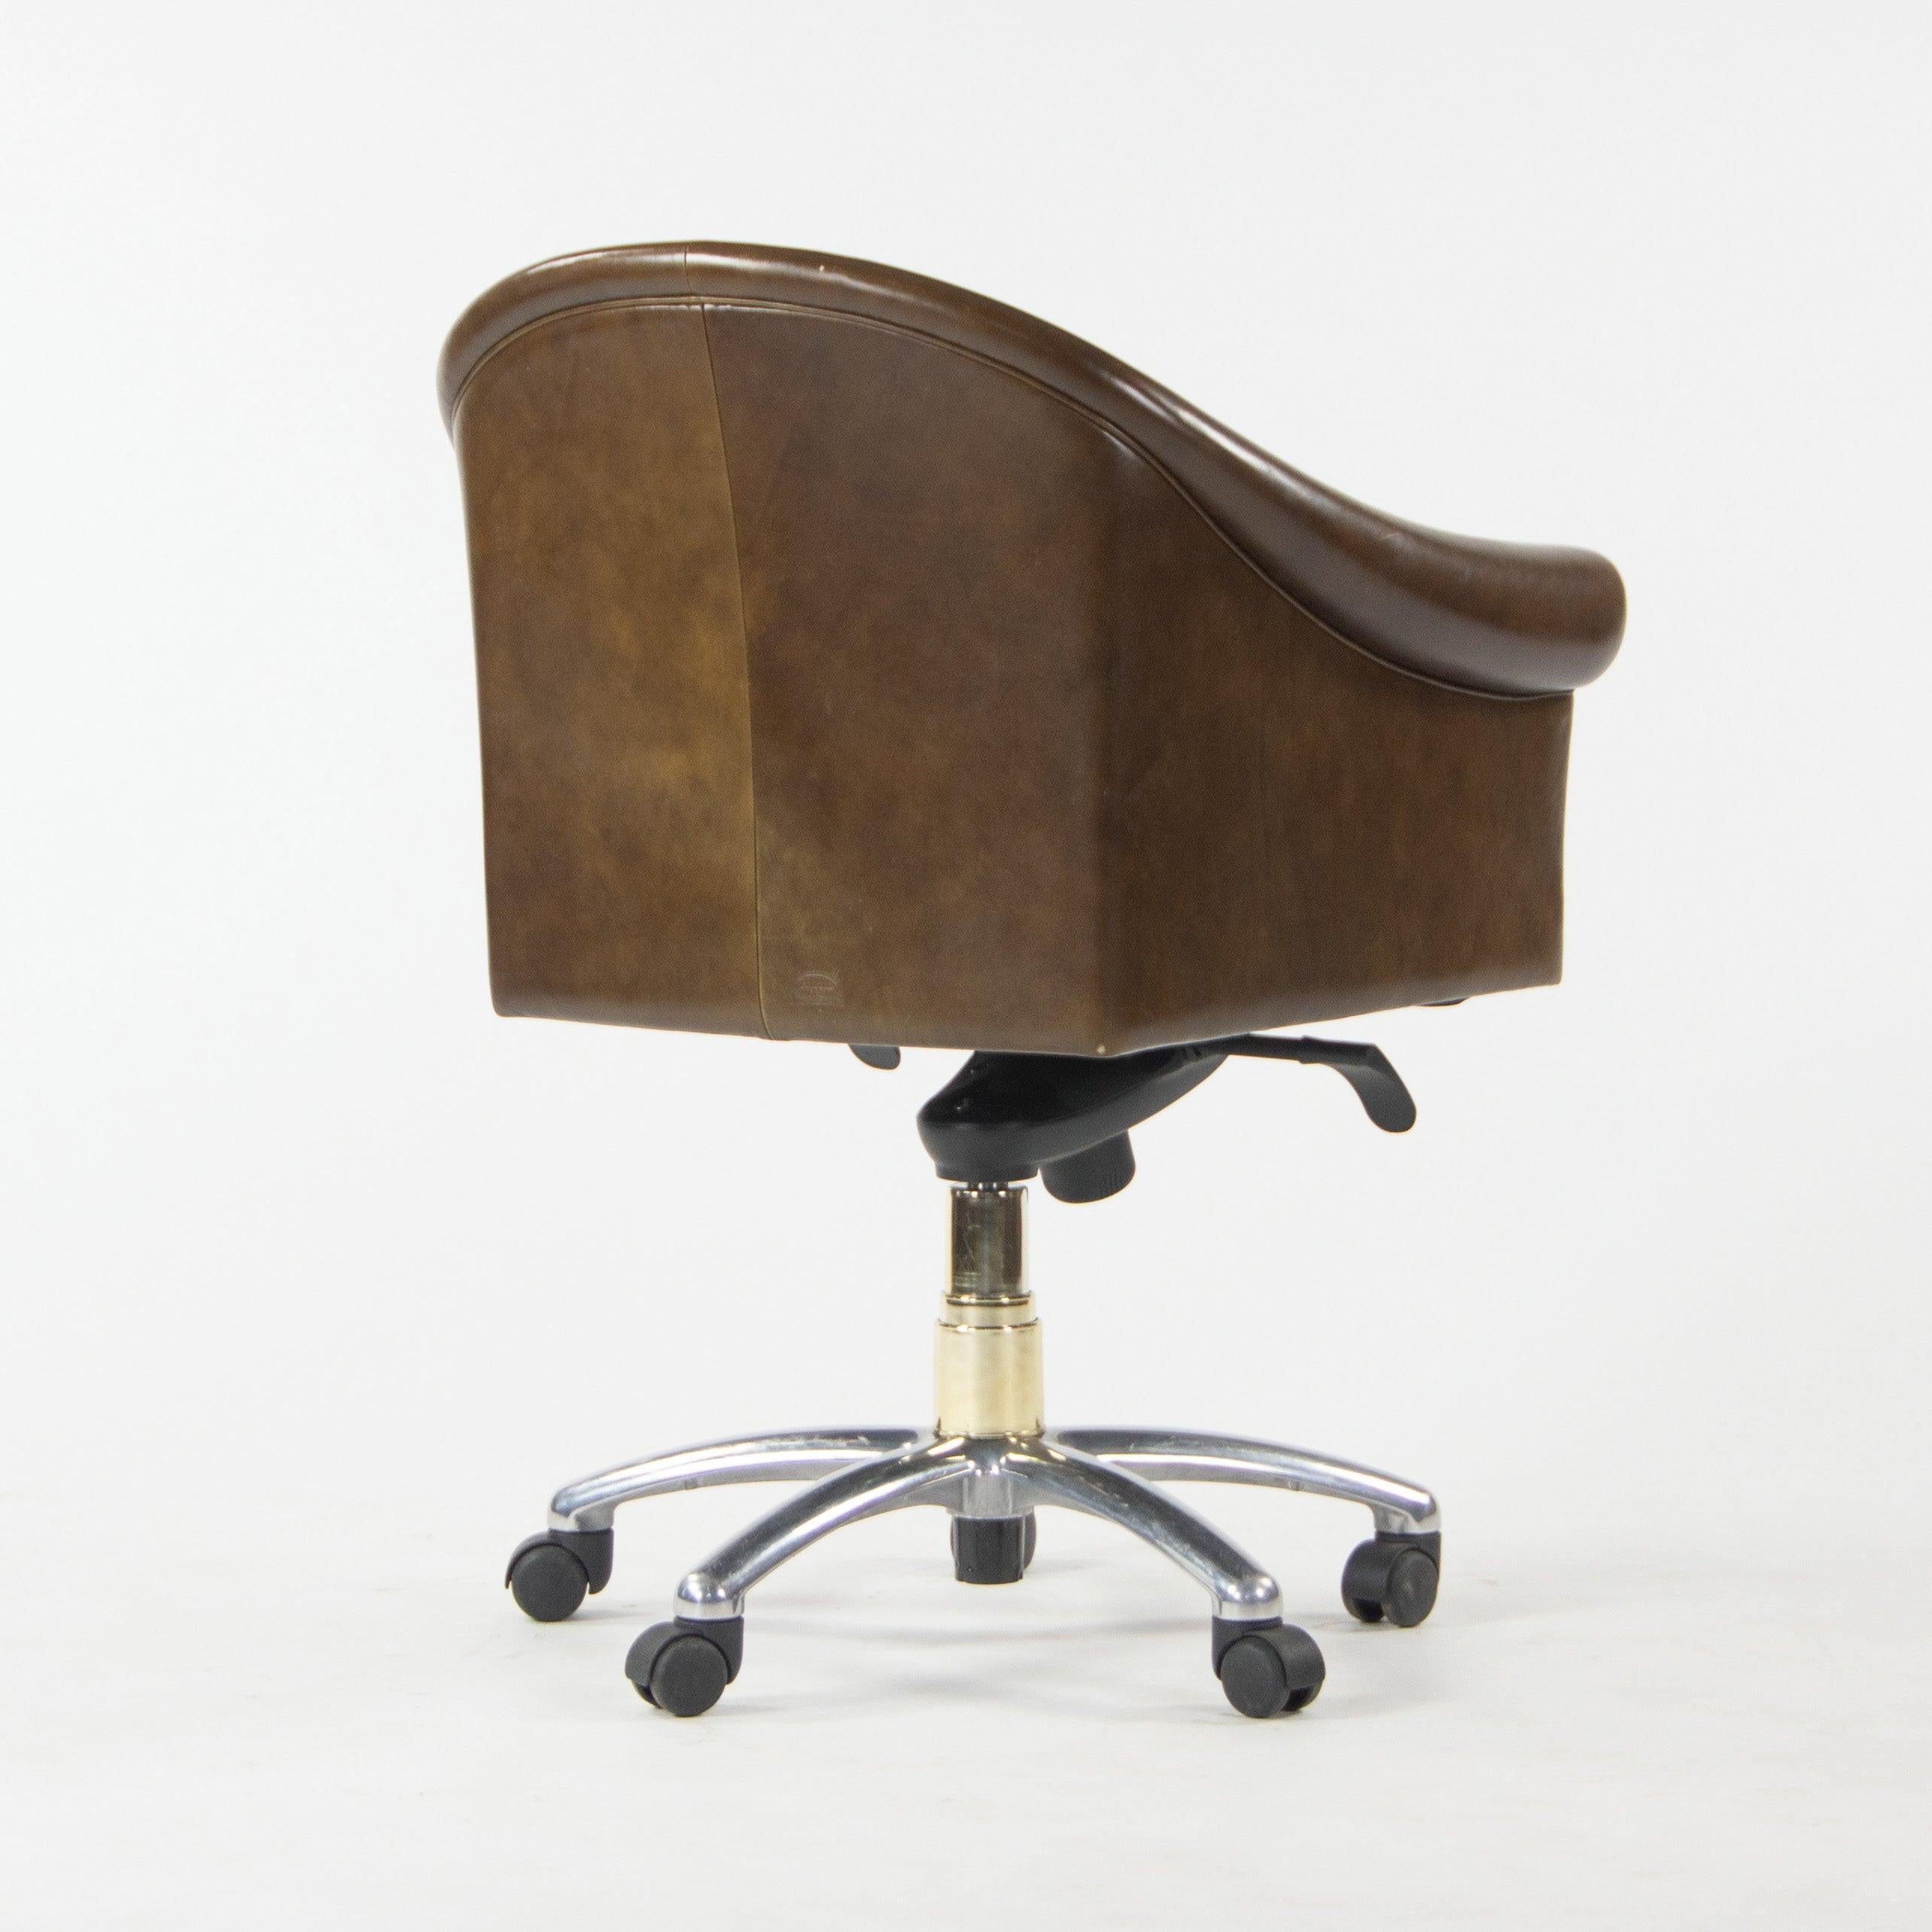 Italian Poltrona Frau Brown Leather Luca Scacchetti Sinan Office Desk Chair For Sale